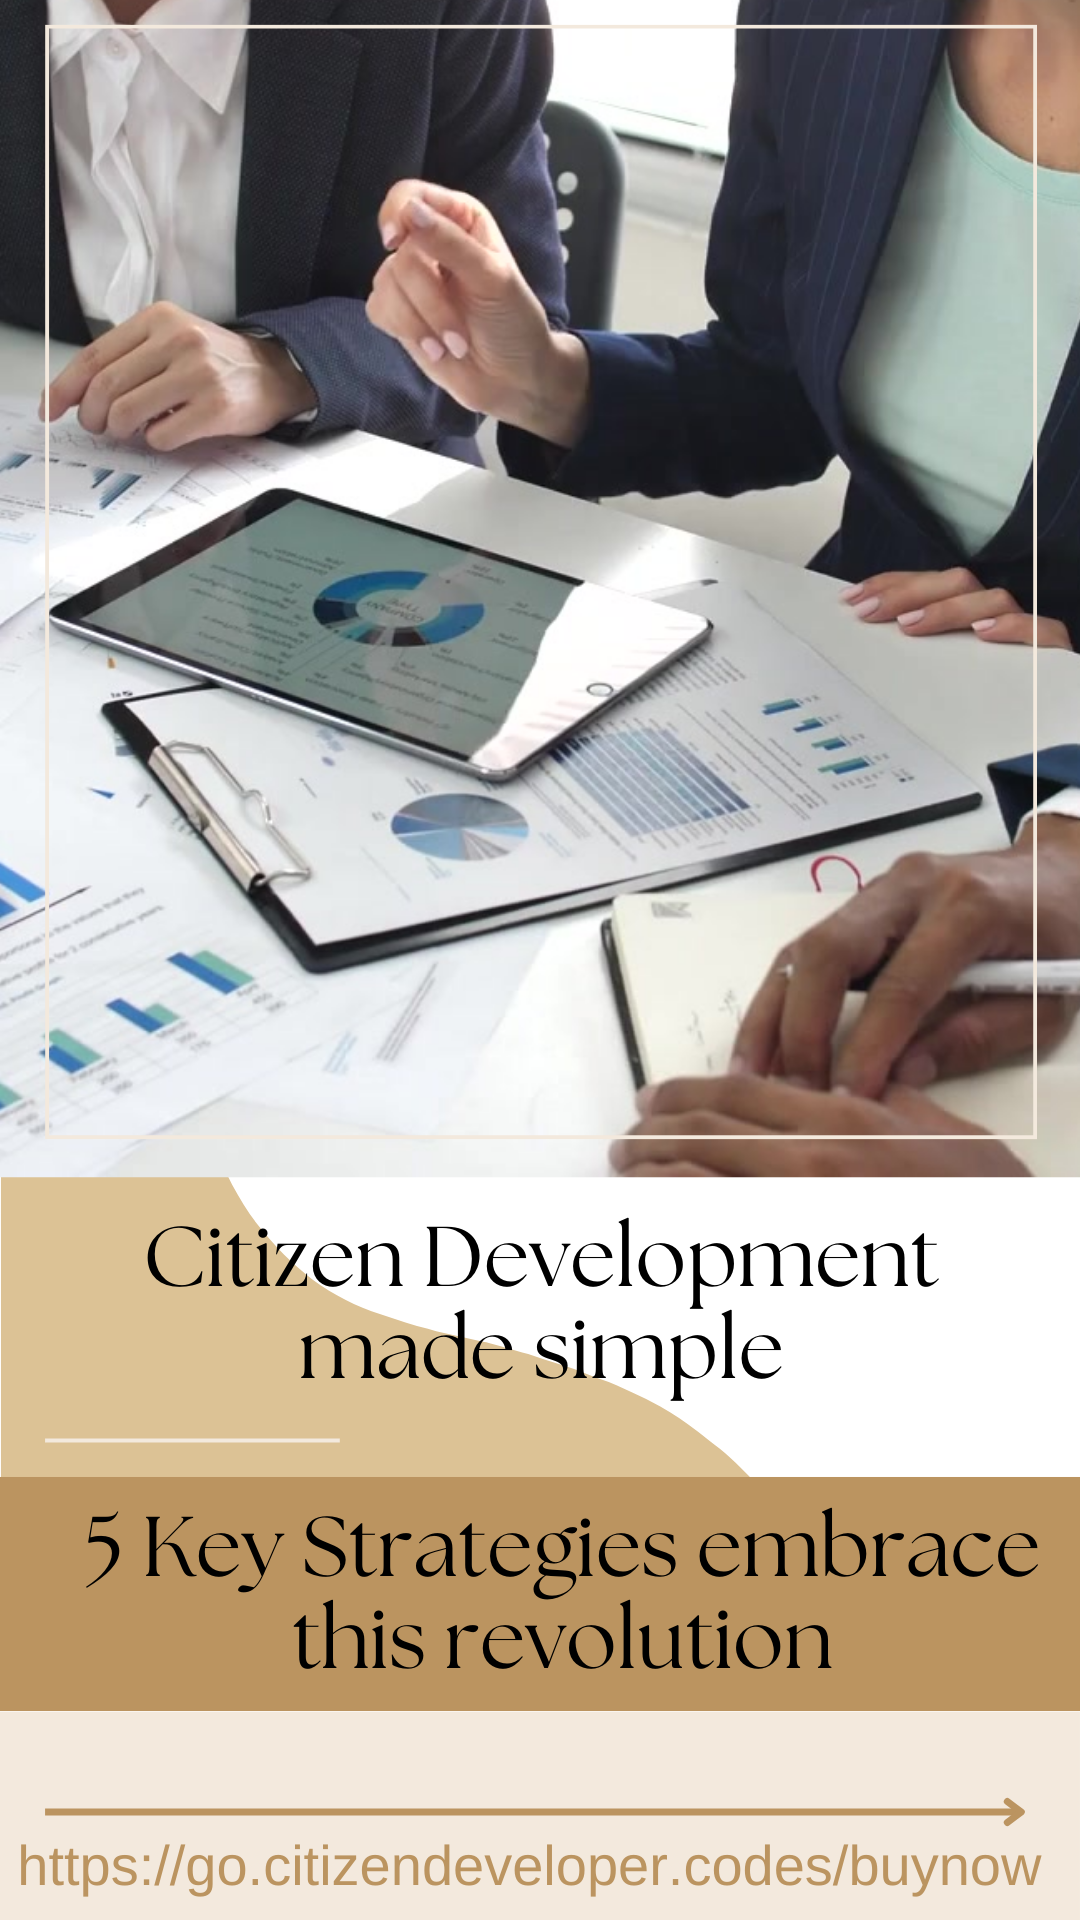 5 Key Strategies embrace Citizen Development revolution